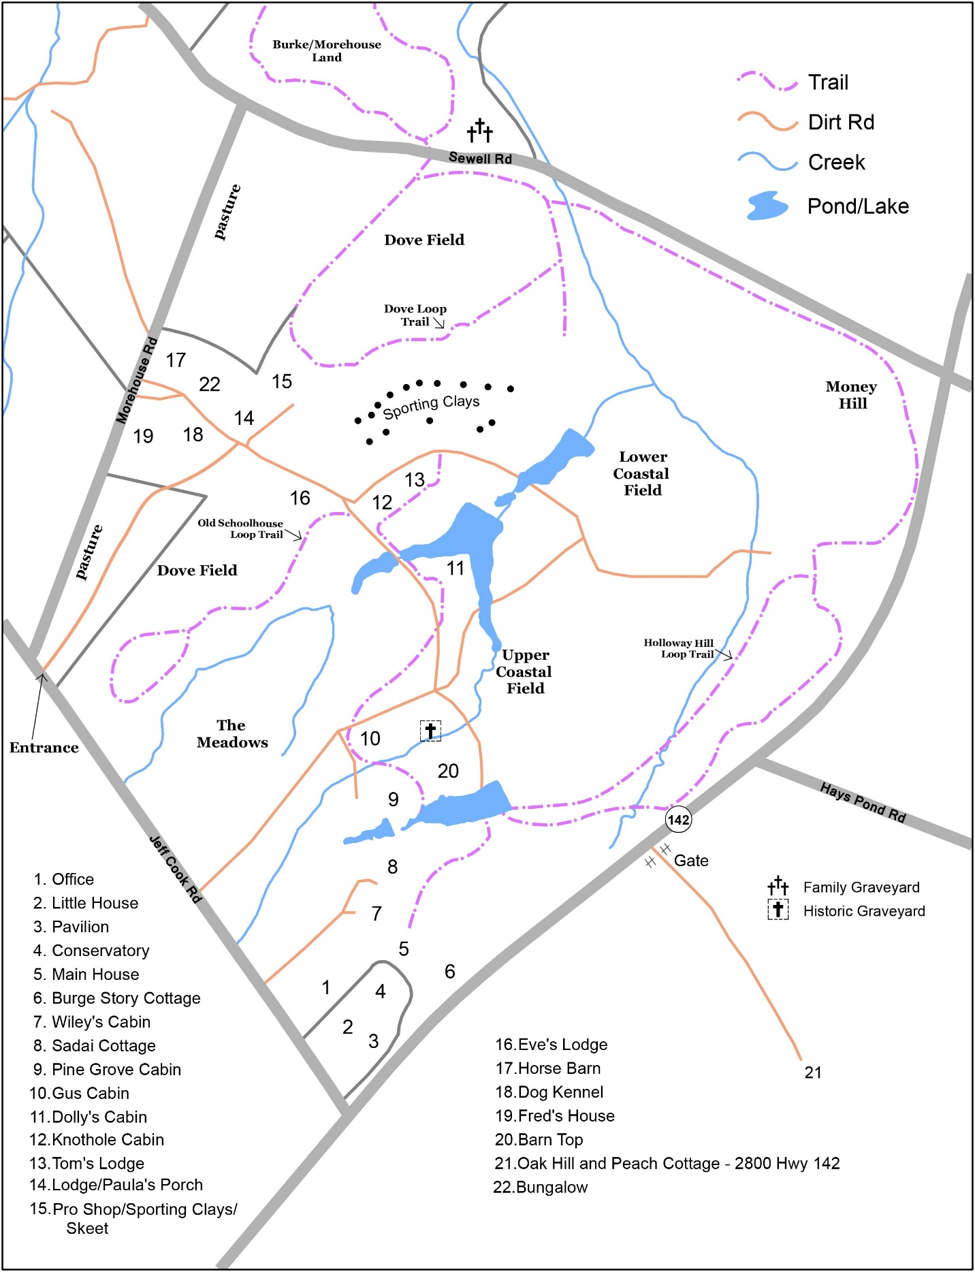 Burge Property Map